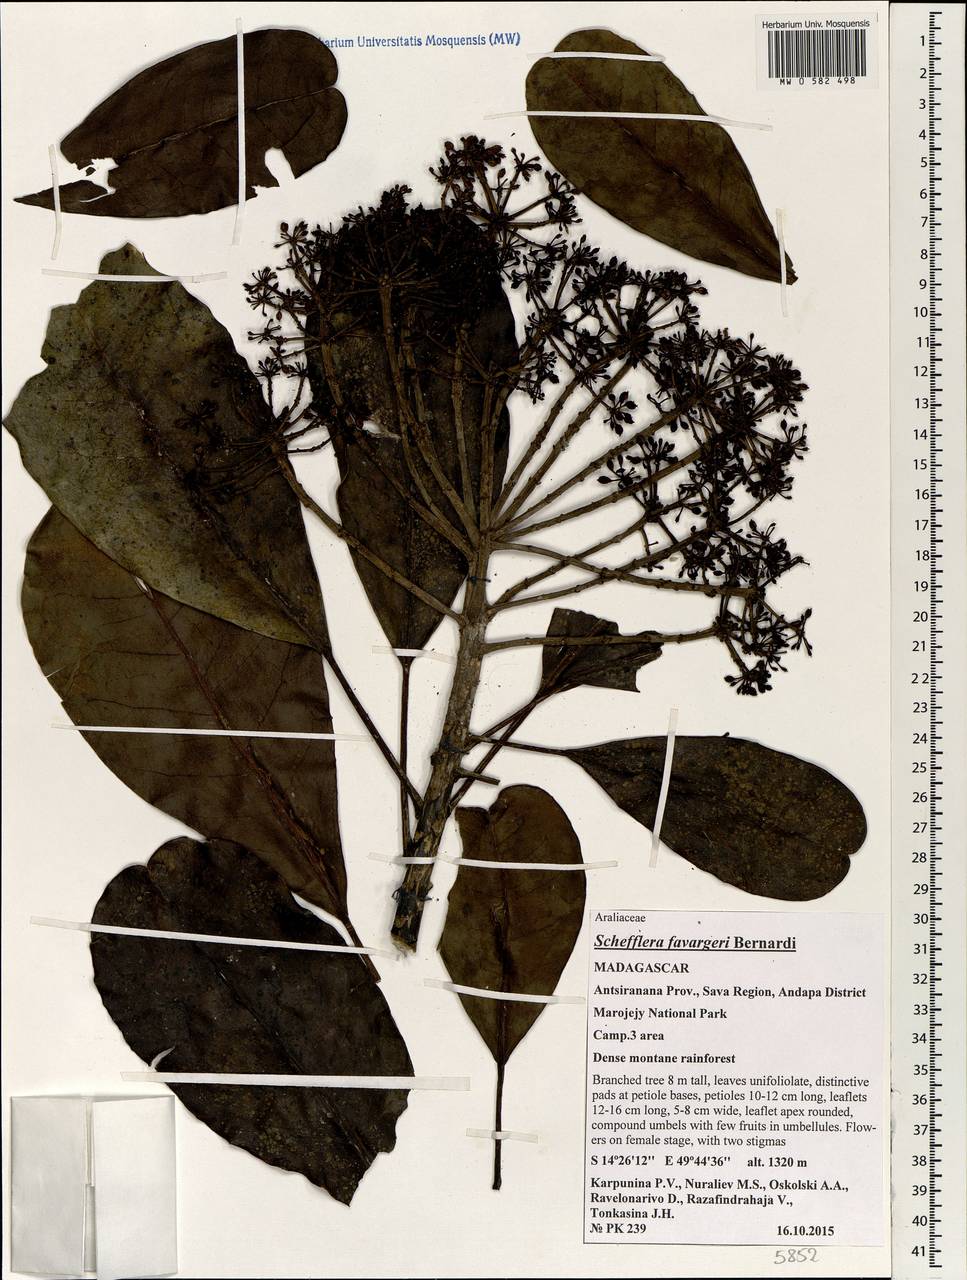 Neocussonia favargeri (Bernardi) Lowry, G. M. Plunkett, Gostel & Frodin, Africa (AFR) (Madagascar)